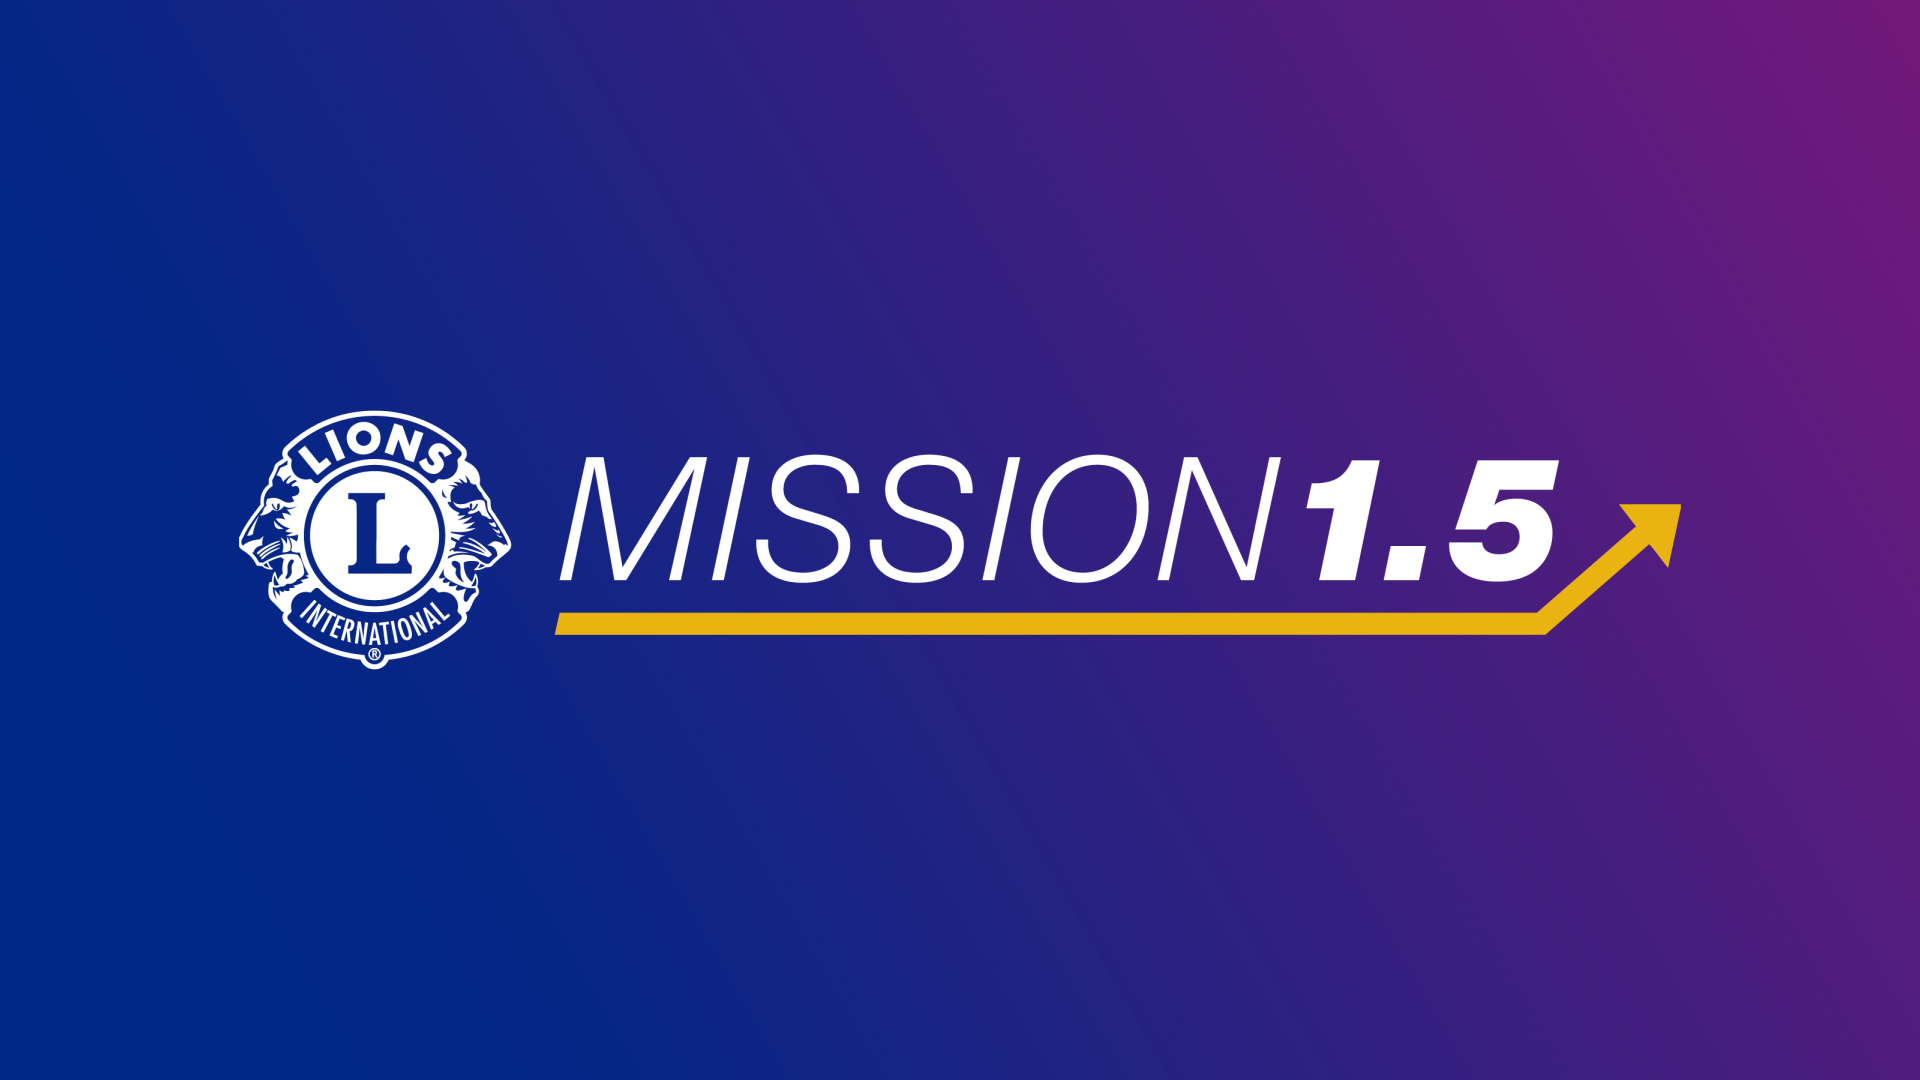 MISSION 1.5 （150万的使命）的标志